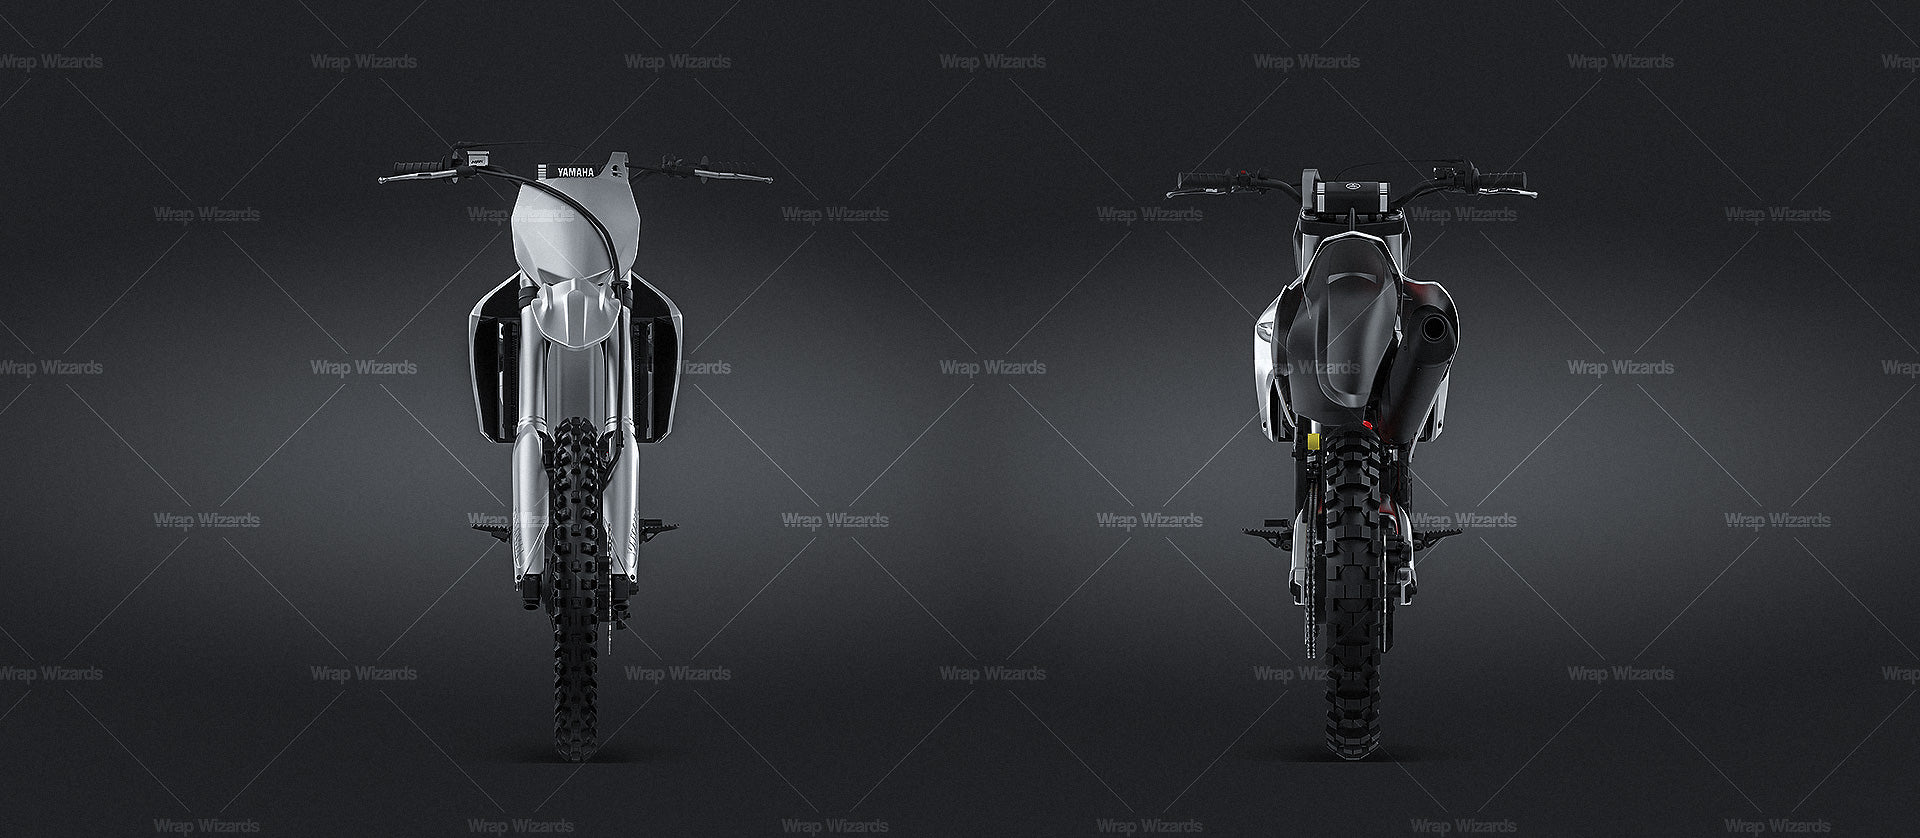 Yamaha YZ250F 2021 Motocross satin matt finish - Motorcycle Mockup Template.psd